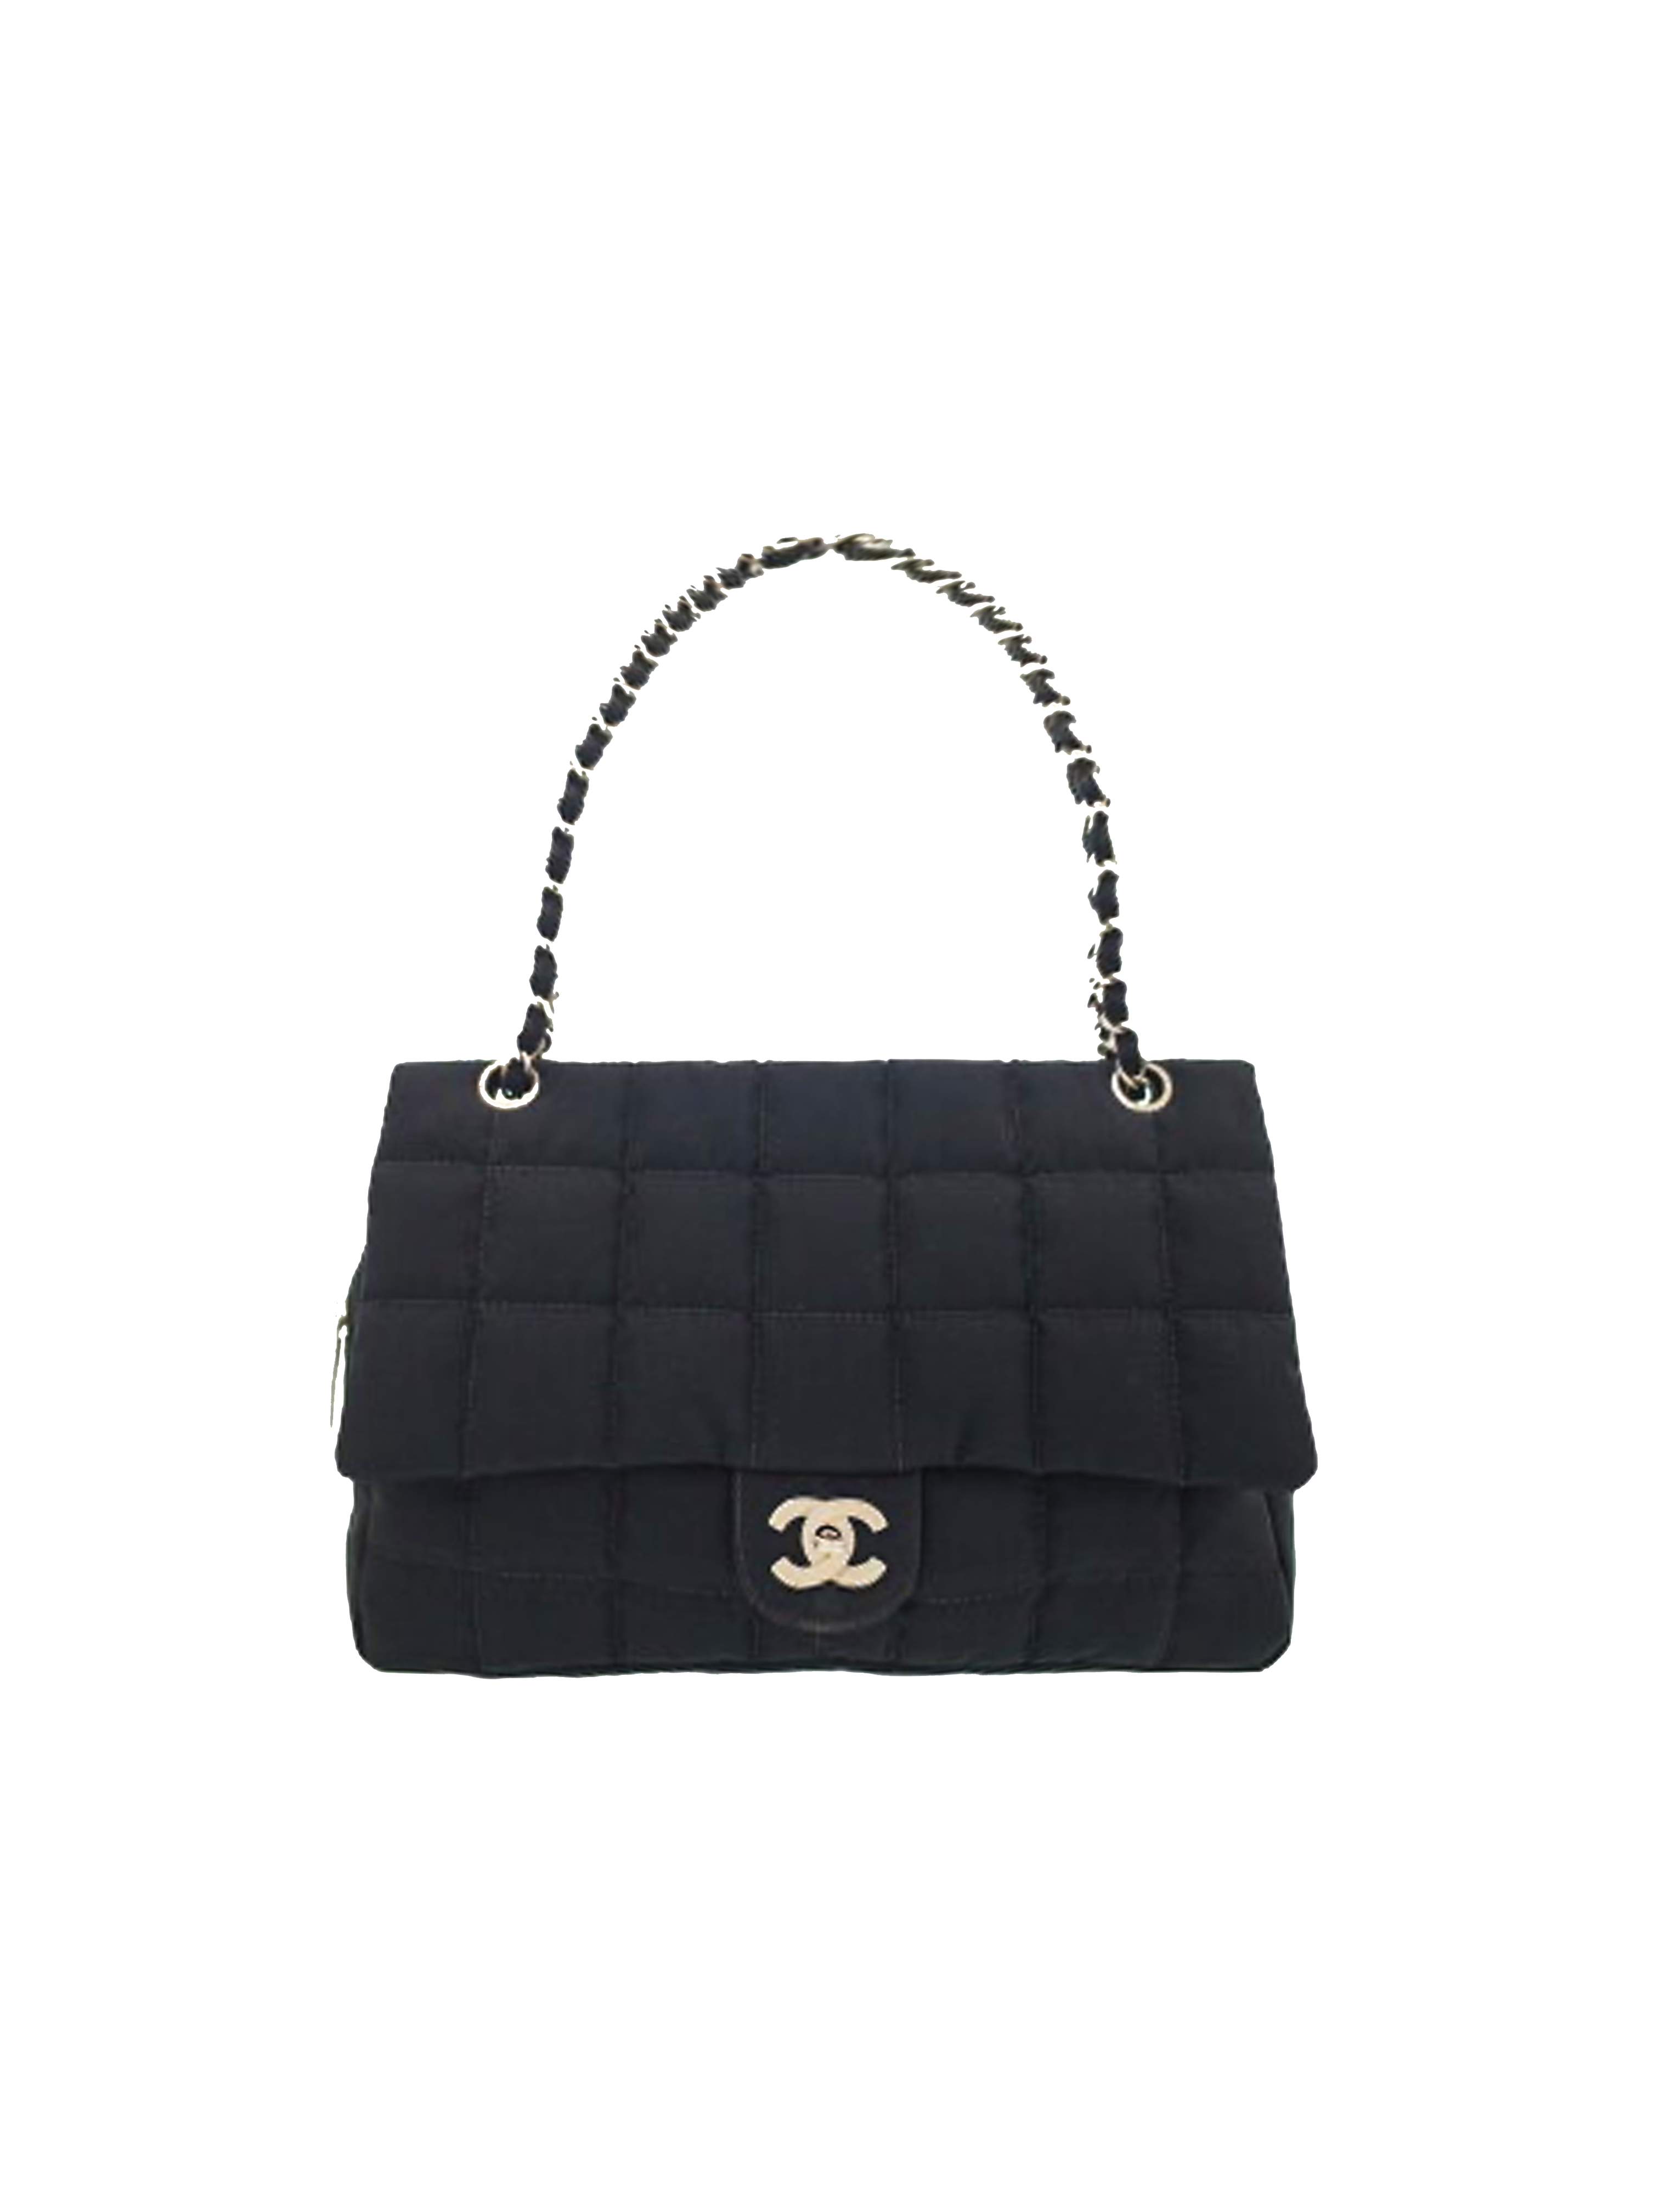 Chanel 2002 Black Nylon Chocolate Bar Bag